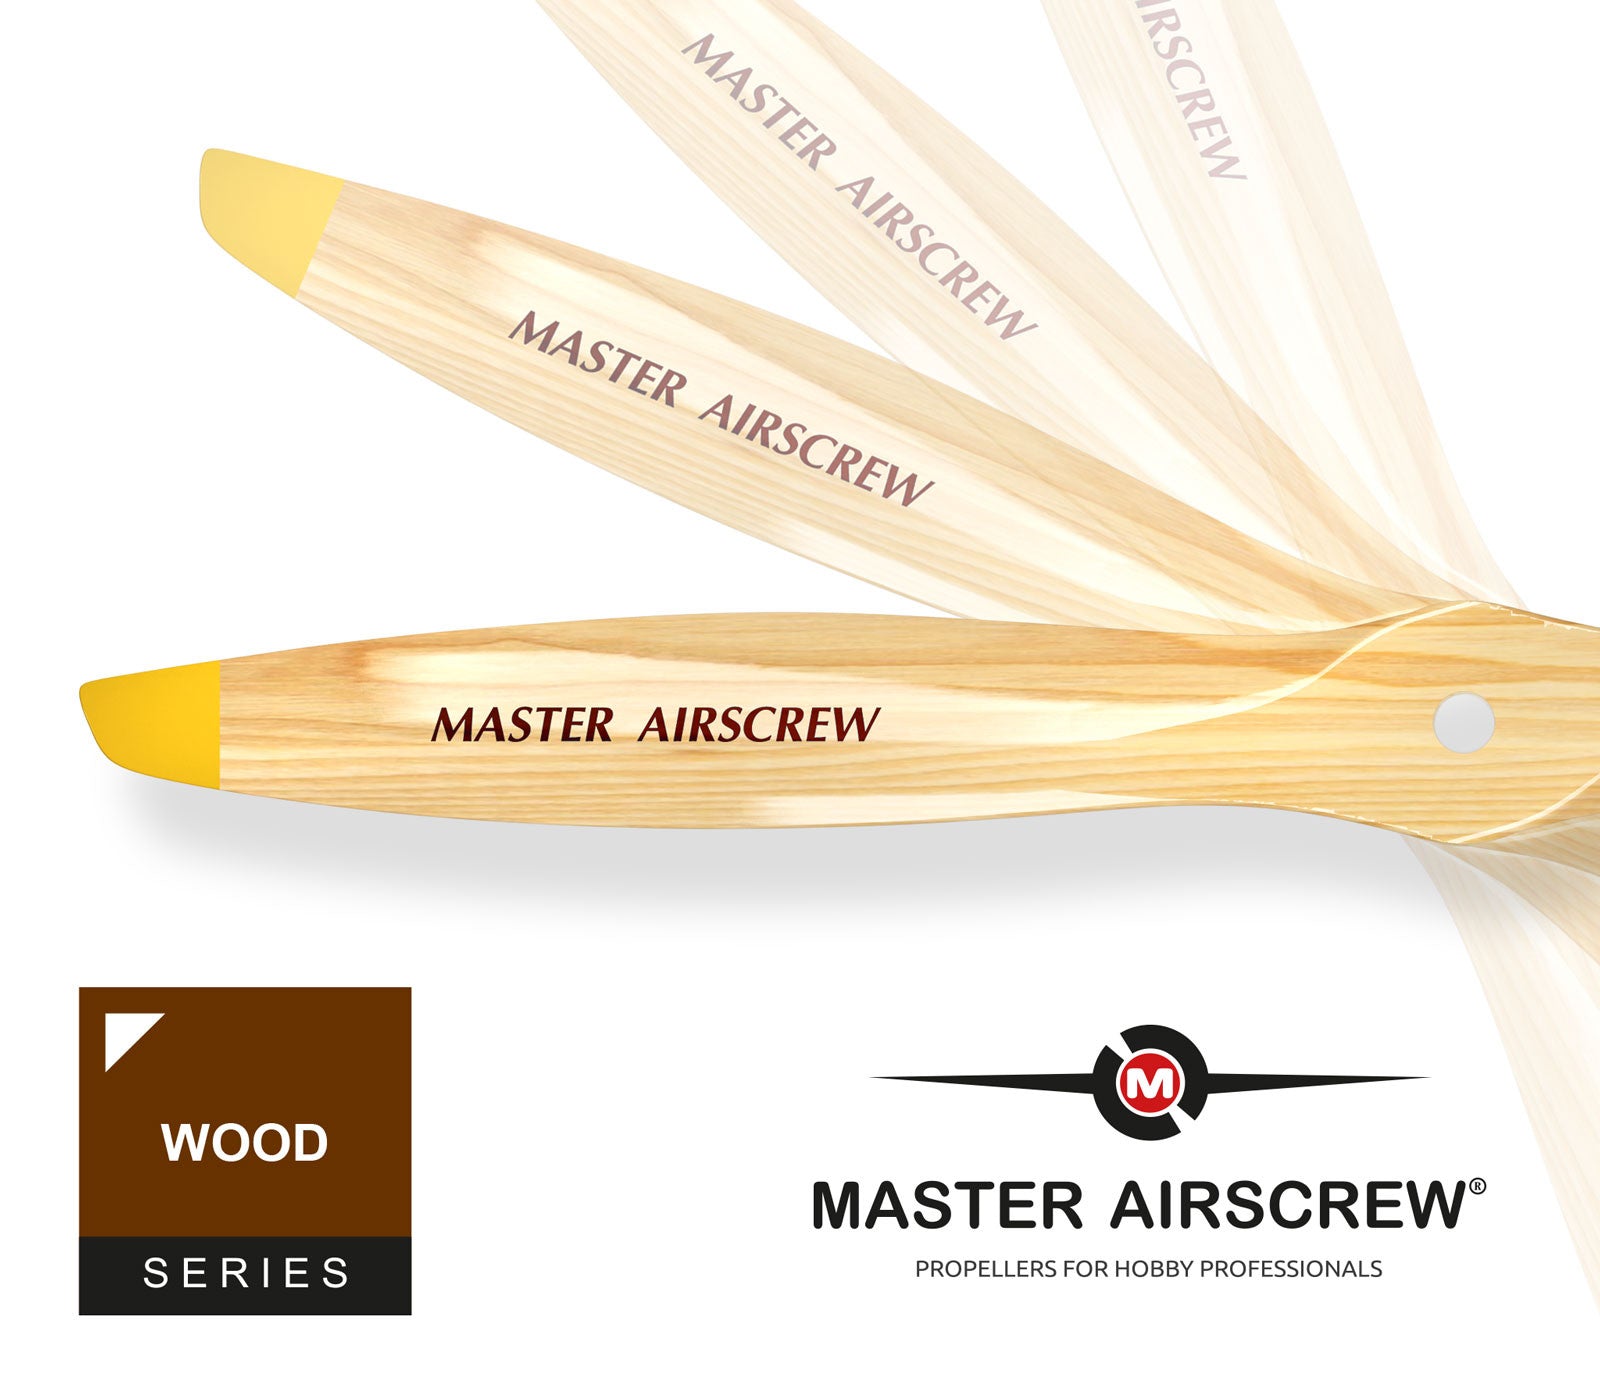 Wood-Maple - 20x6 Propeller - Master Airscrew